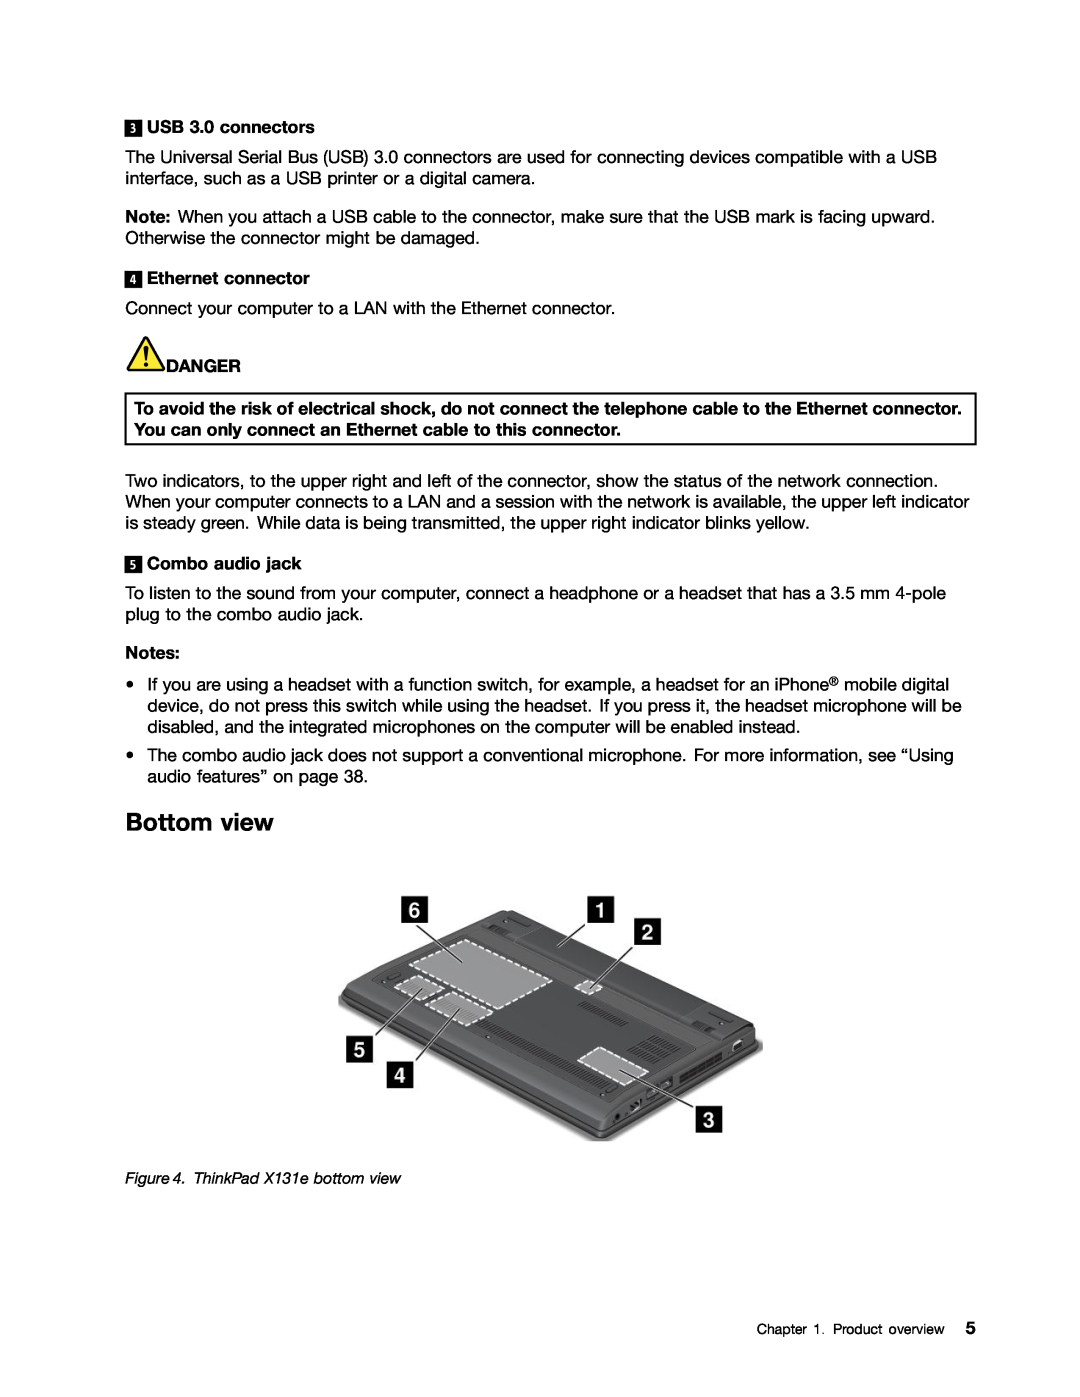 Lenovo X131E manual Bottom view, USB 3.0 connectors, Ethernet connector, Combo audio jack, Danger 